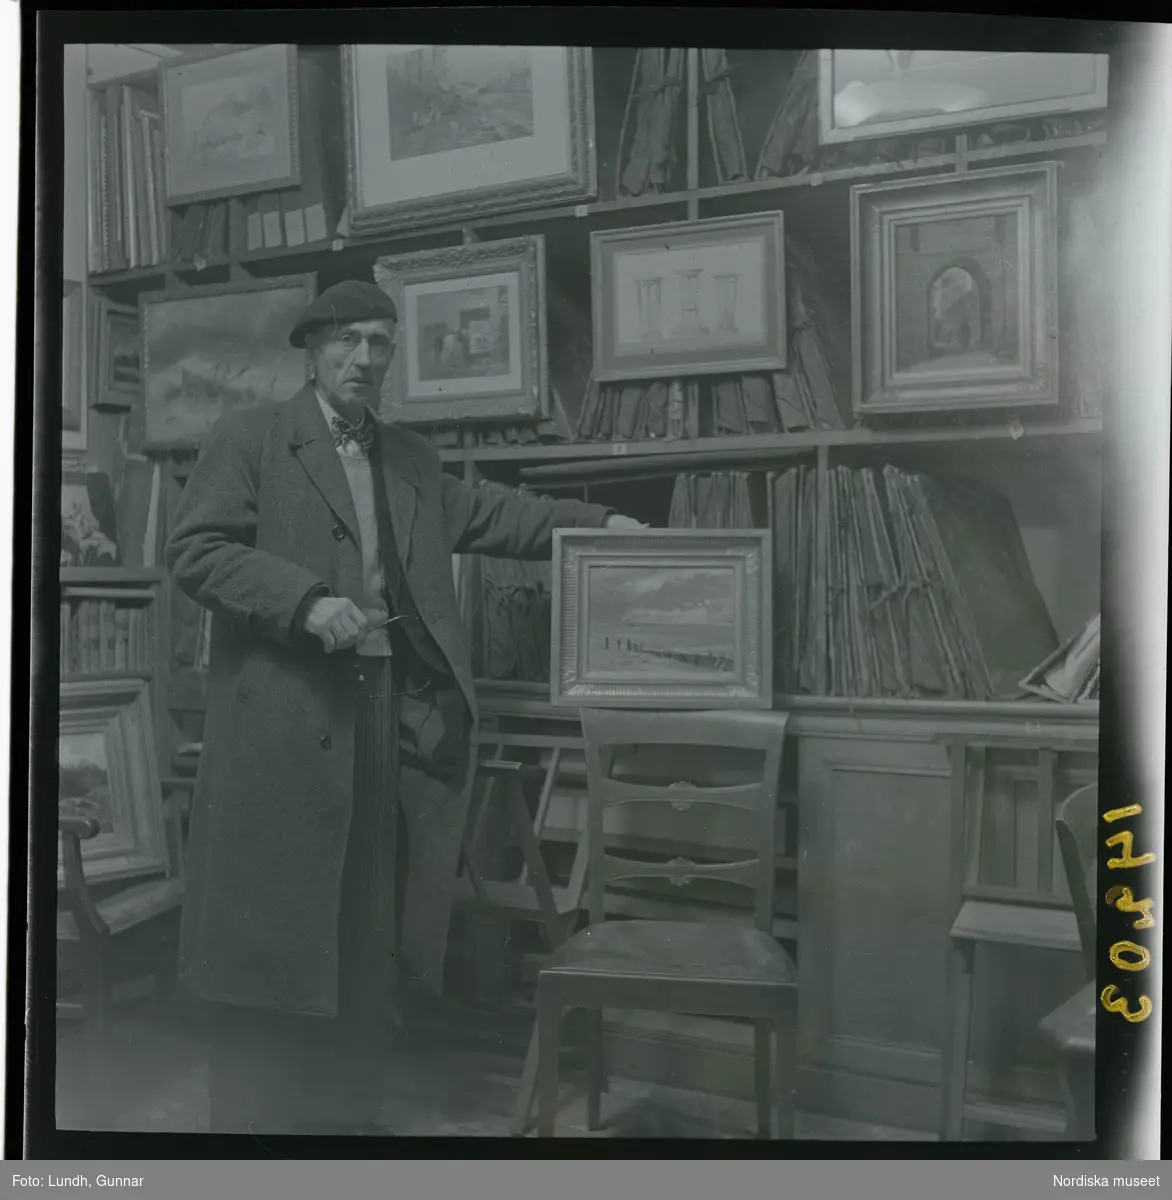 1950. Paris. En man stå inne i en butik med konst.